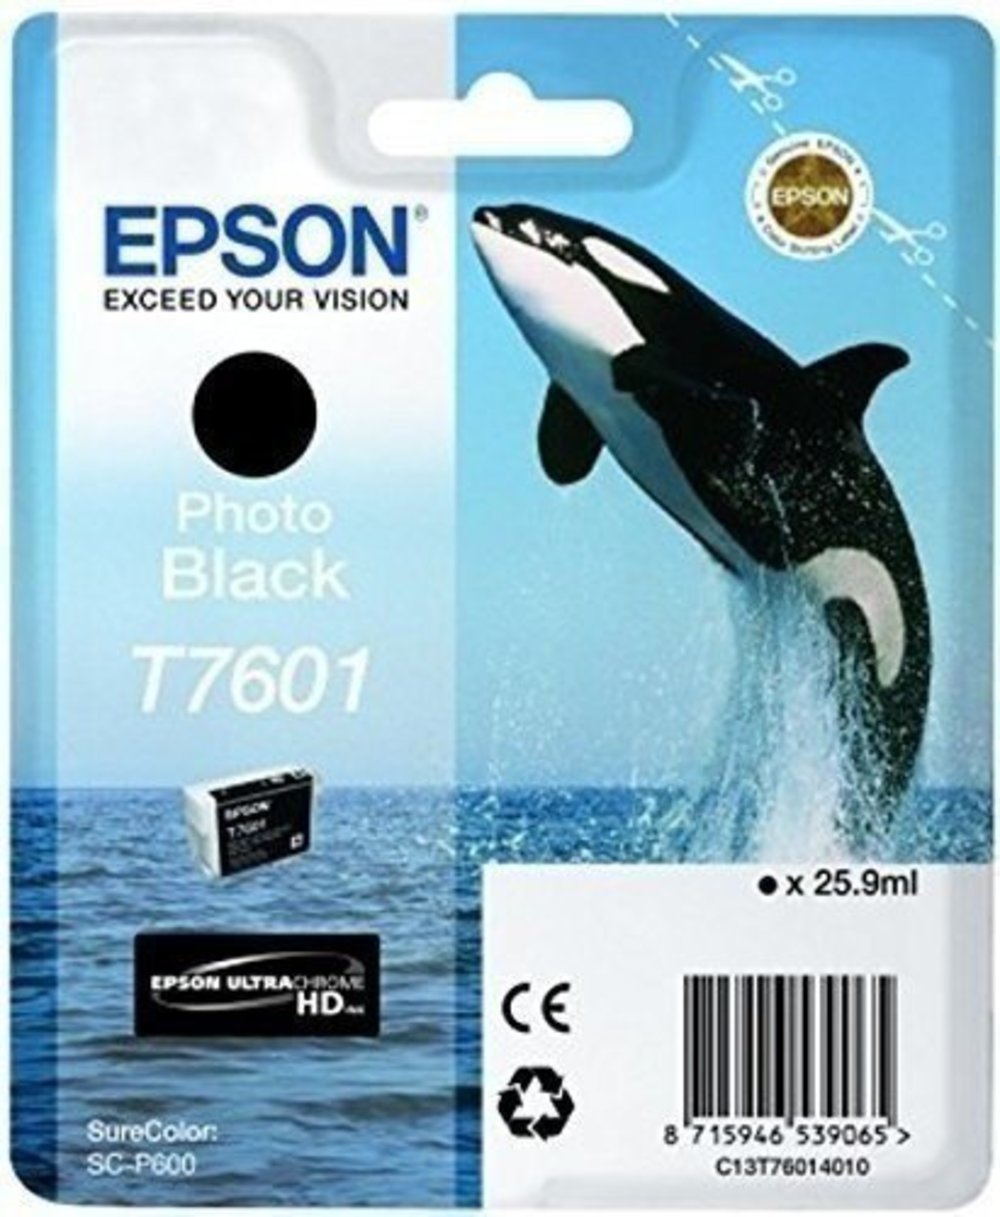 EPSON T7601 PHOTO BLACK